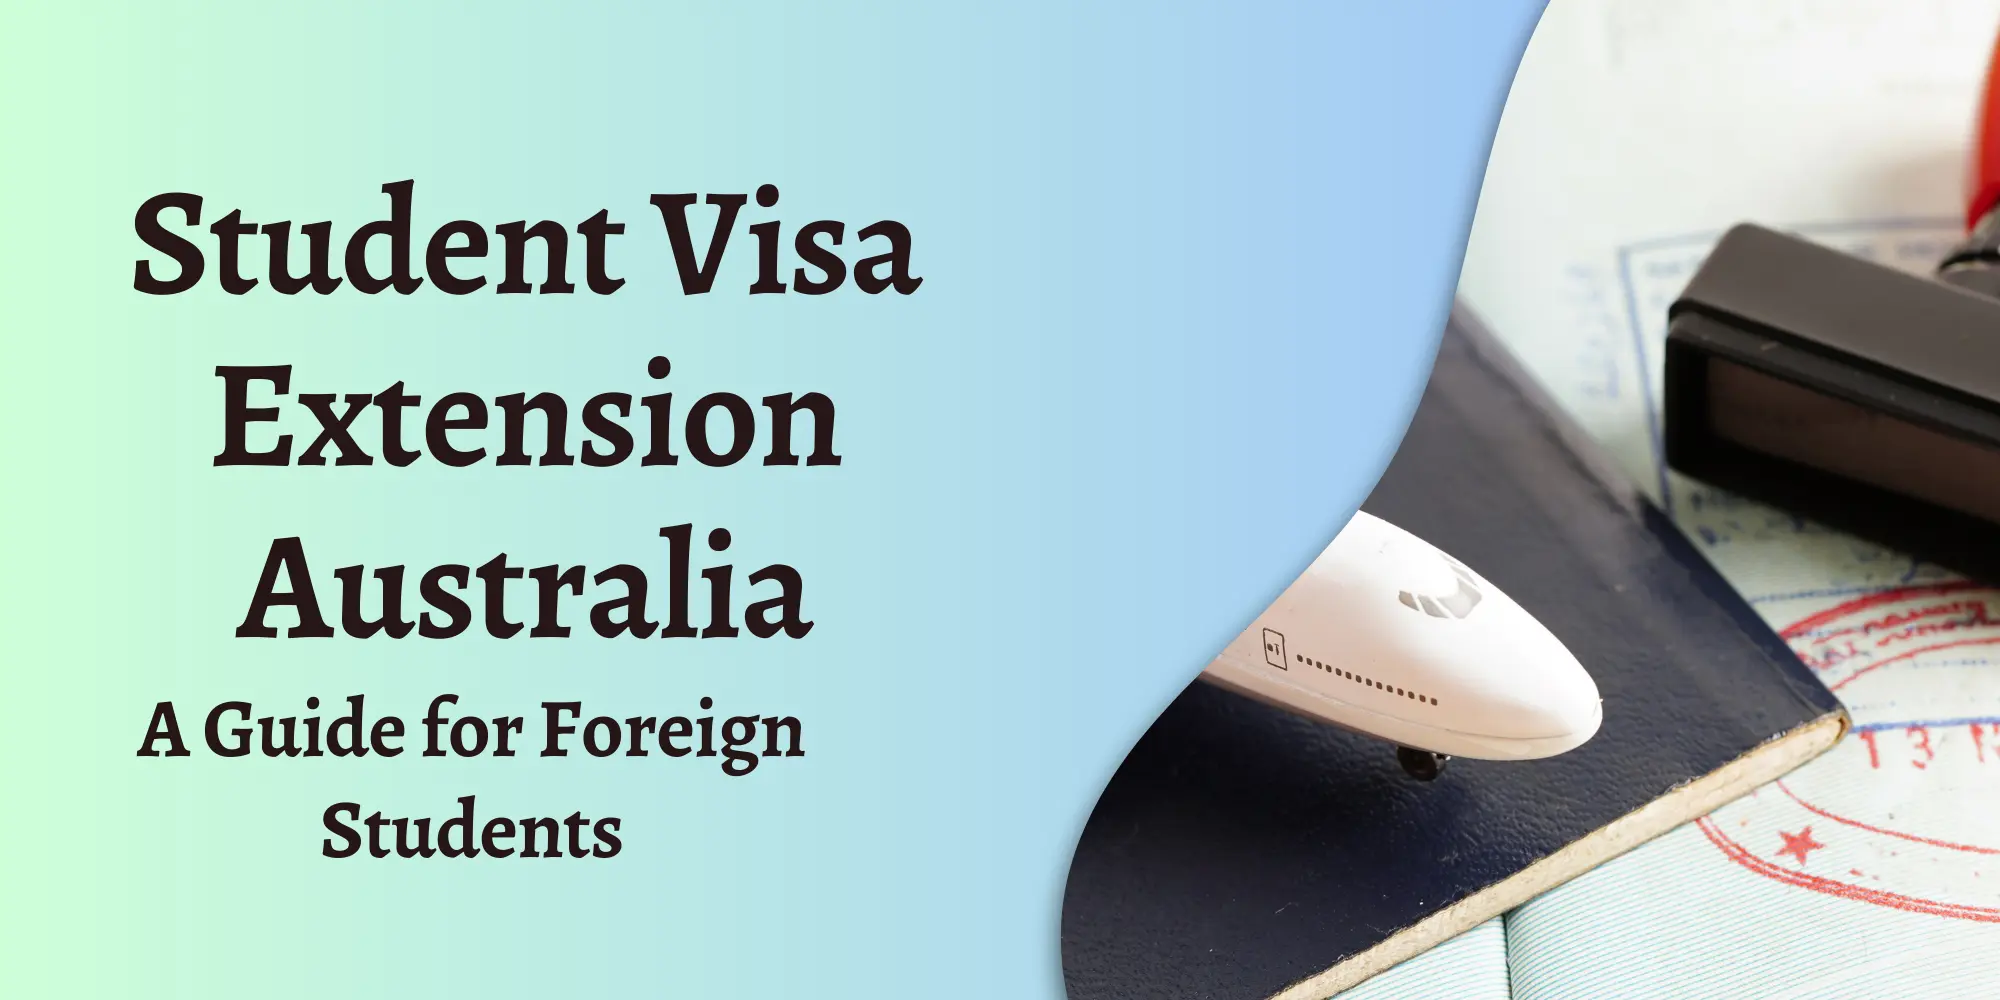 student visa extension australia image thumbnail